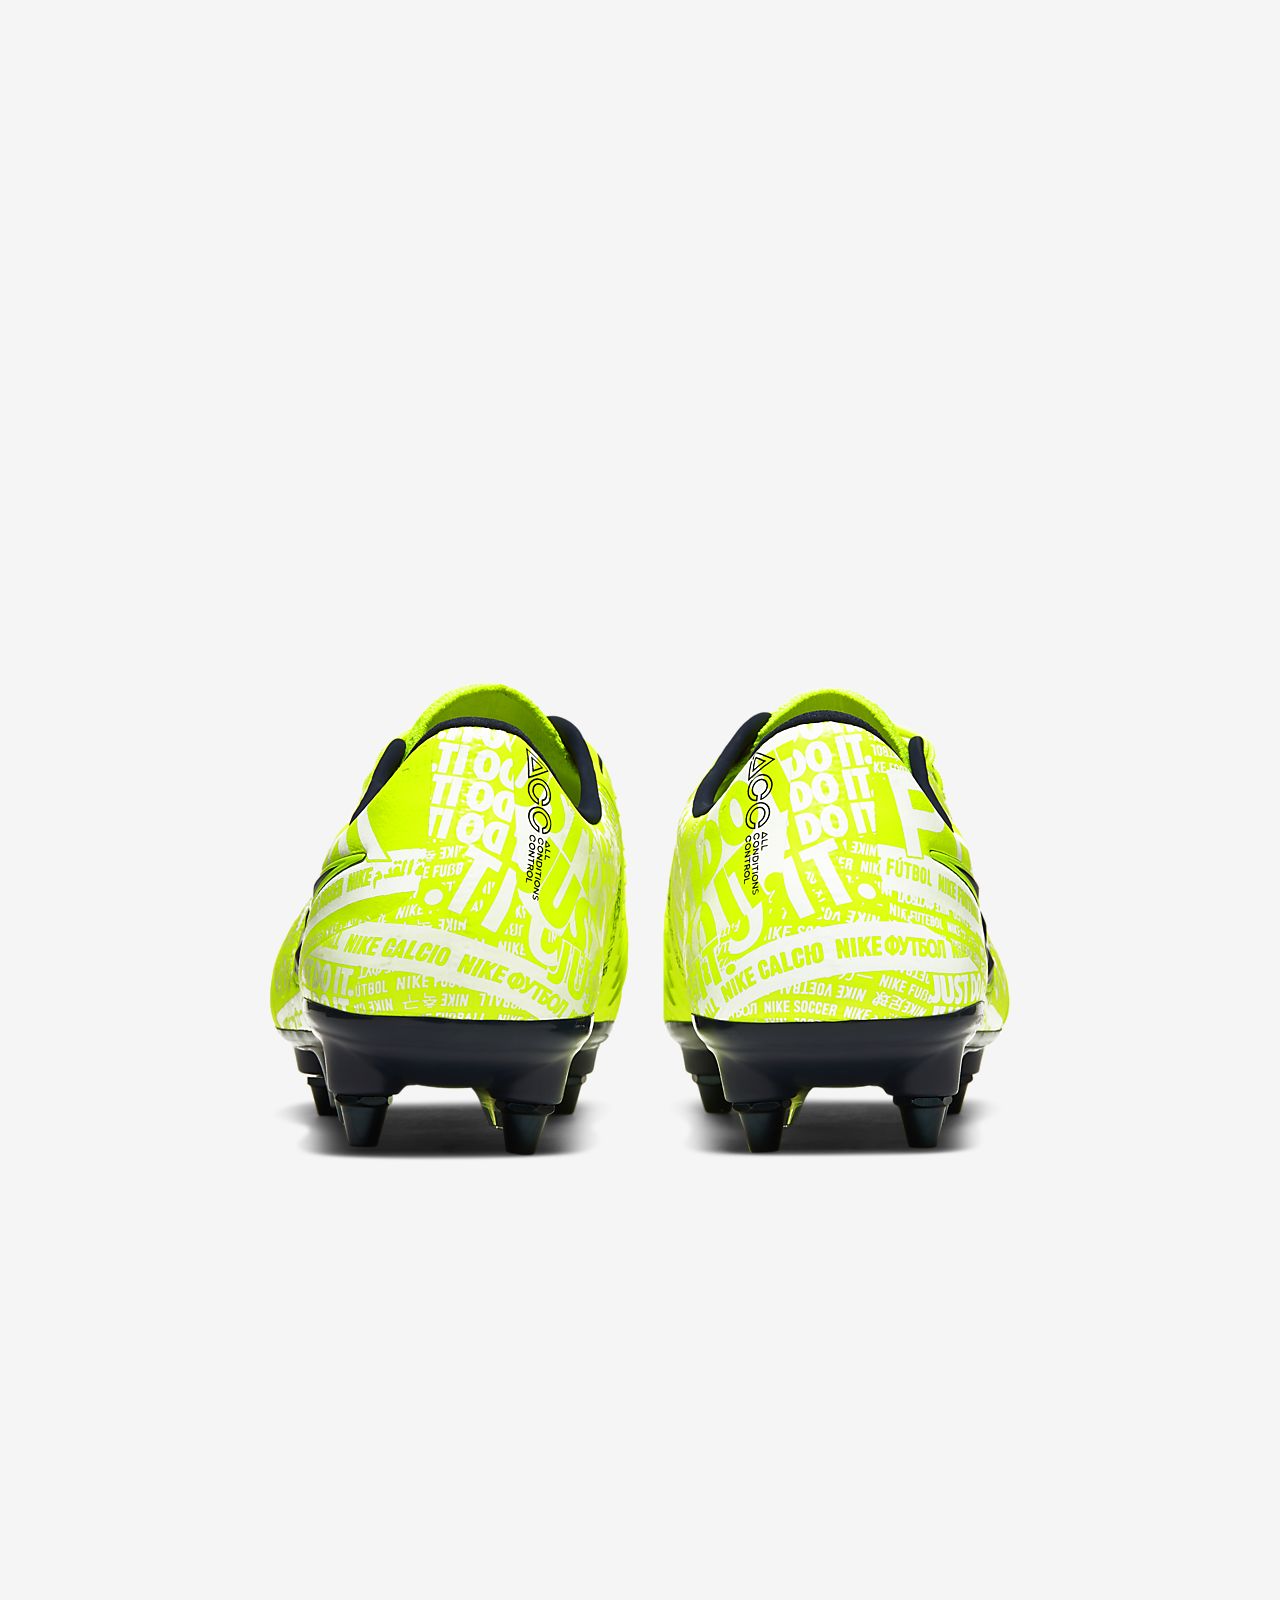 New Nike Phantom Vision Elite DF FG Soccer Boots Soccer Shoes